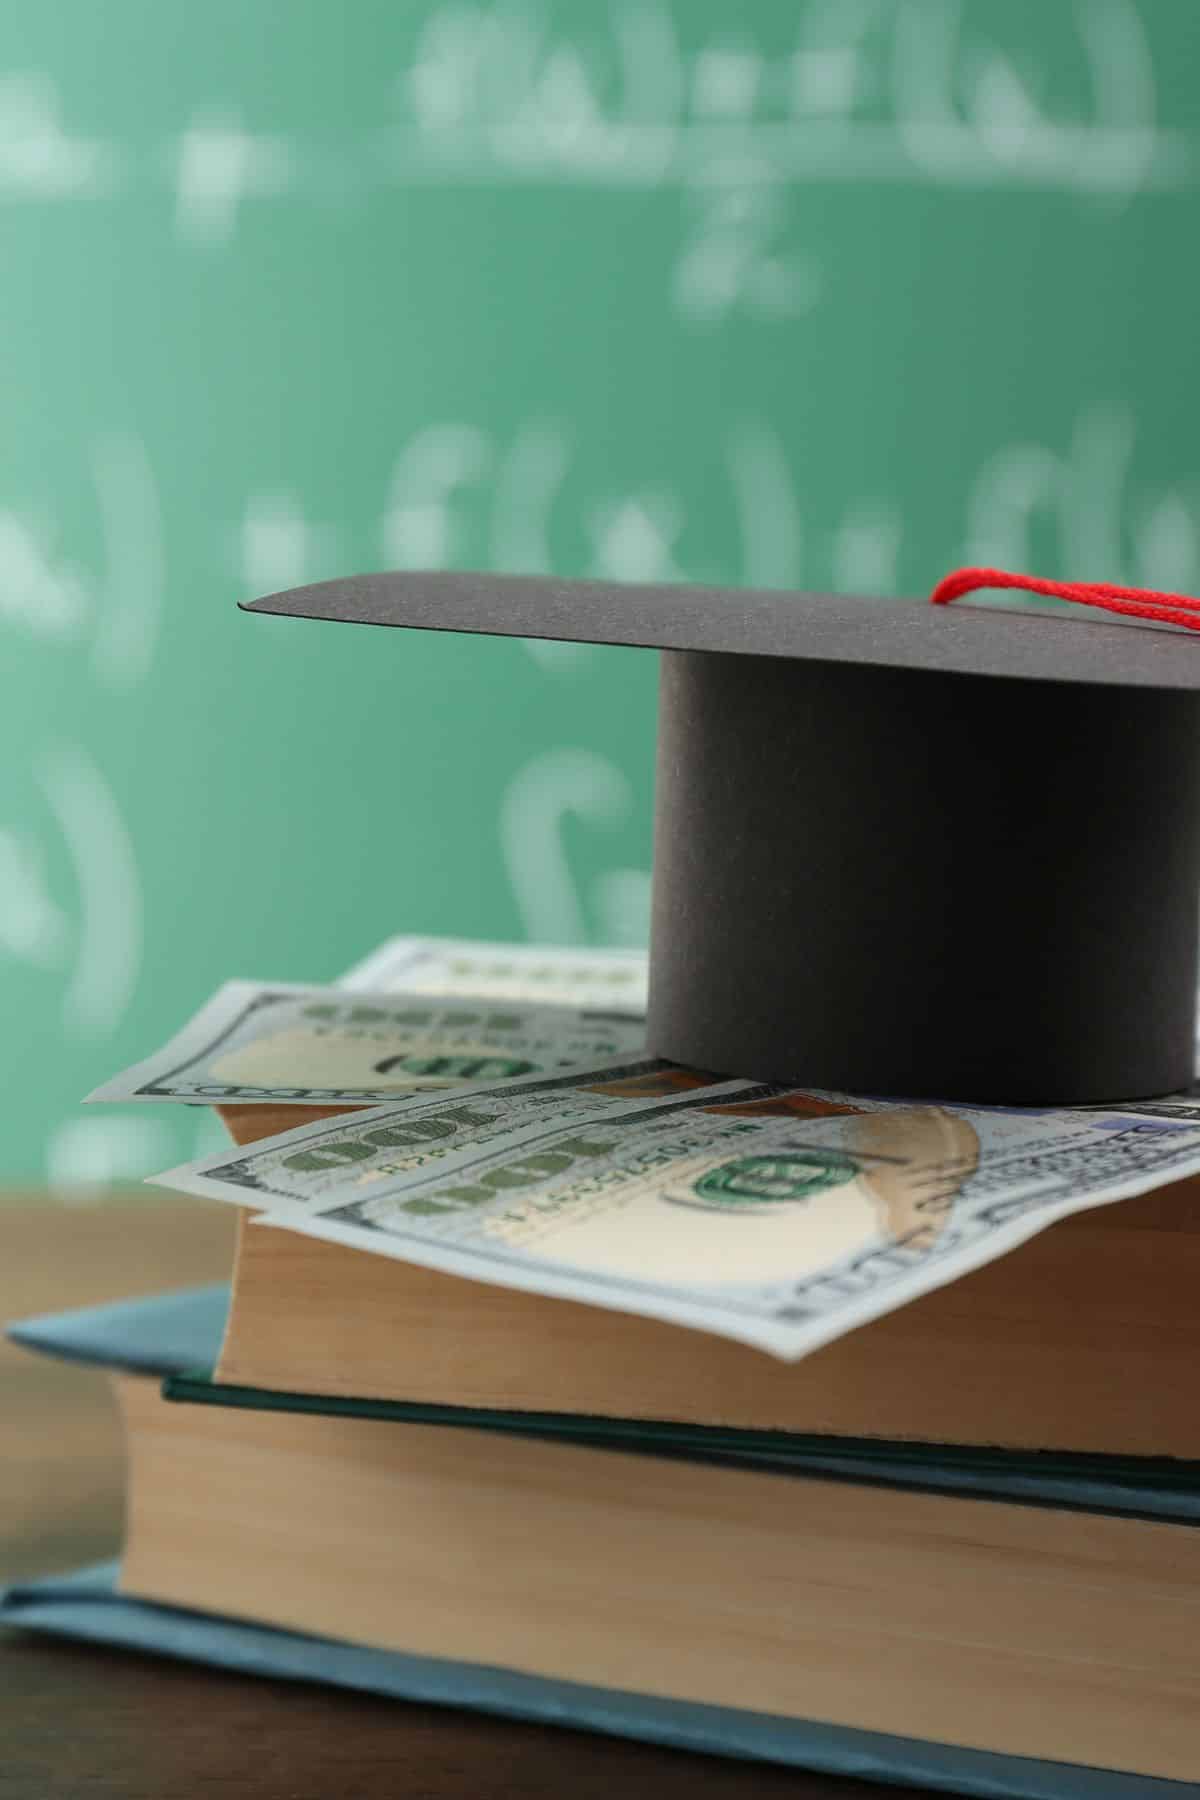 Books, money, and a graduation cap